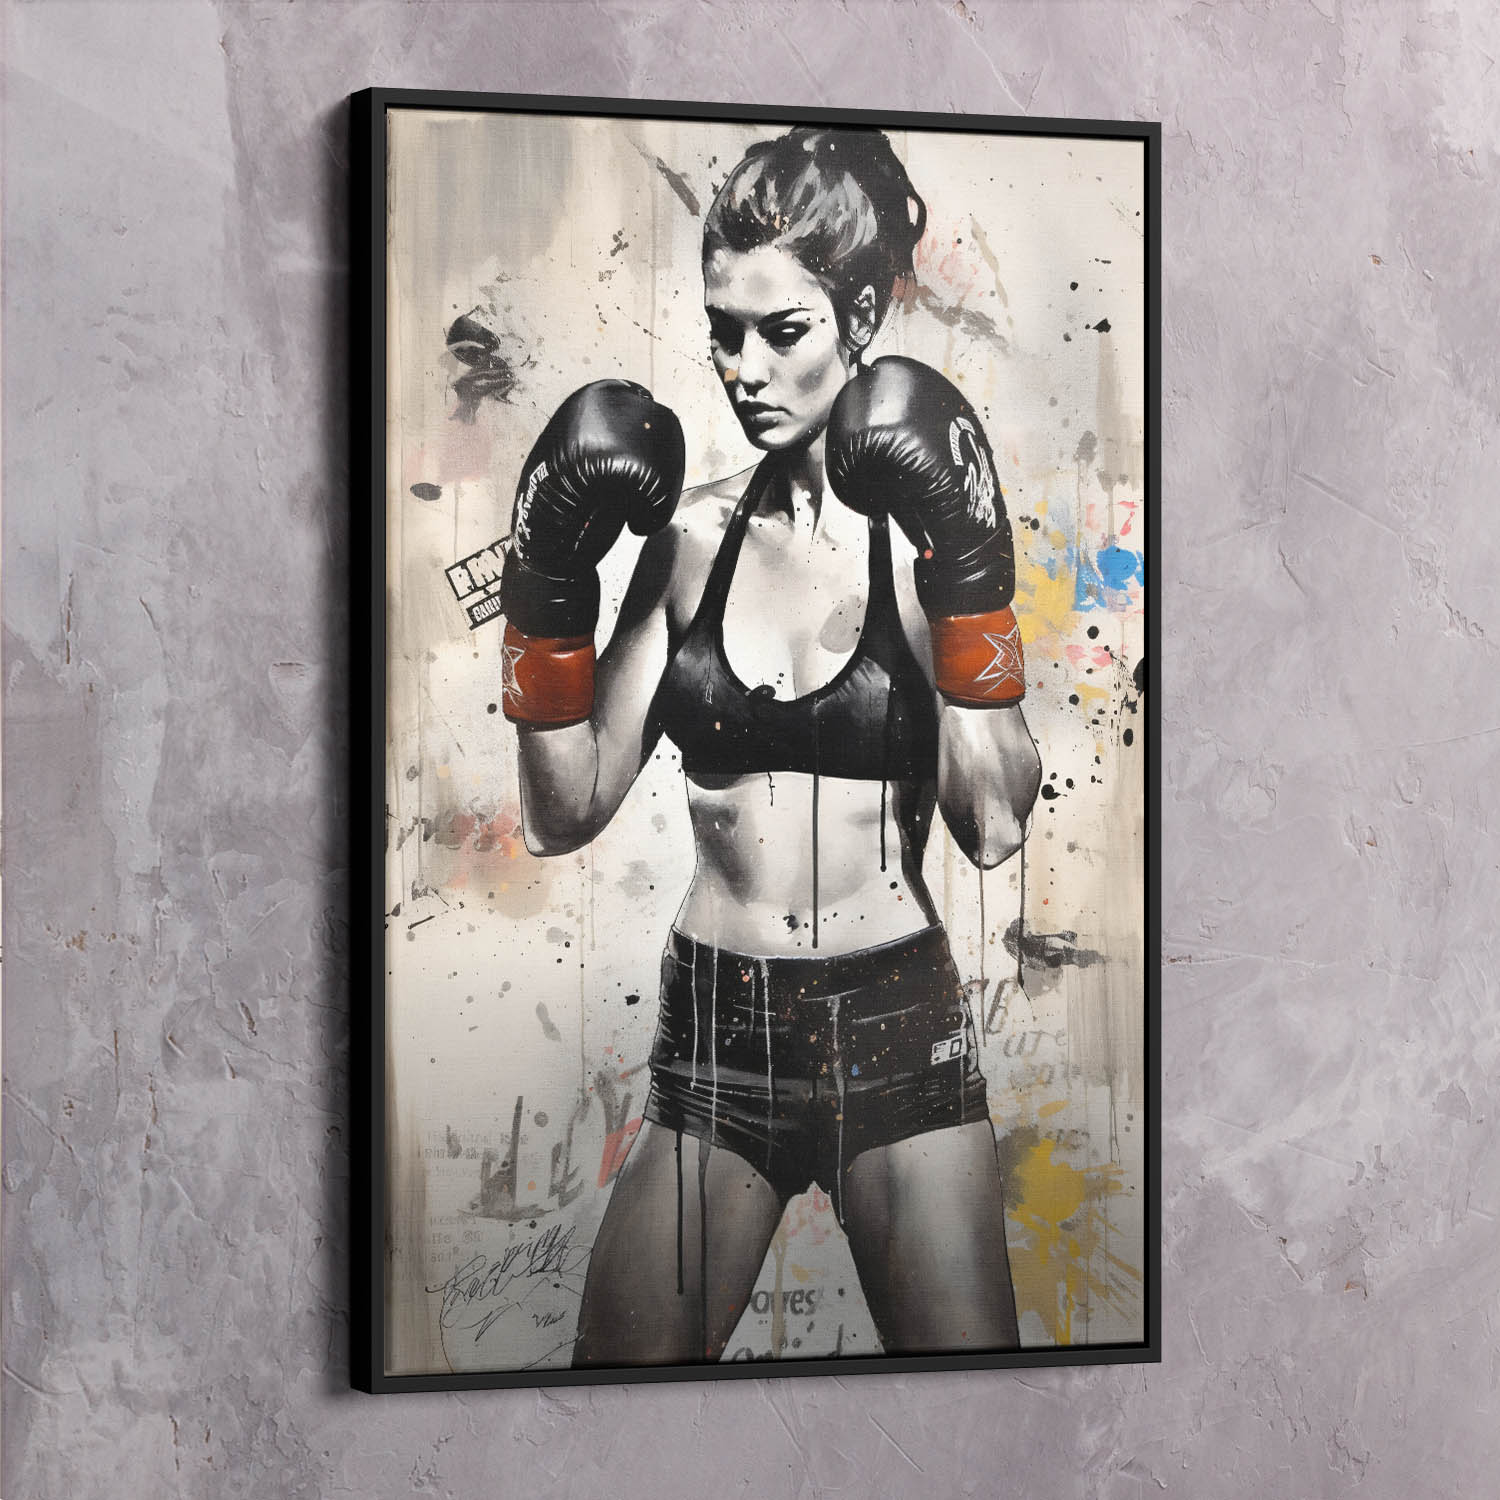 Female Boxer - Falling Is Okay Quote Wall Art | Inspirational Wall Art Motivational Wall Art Quotes Office Art | ImpaktMaker Exclusive Canvas Art Portrait